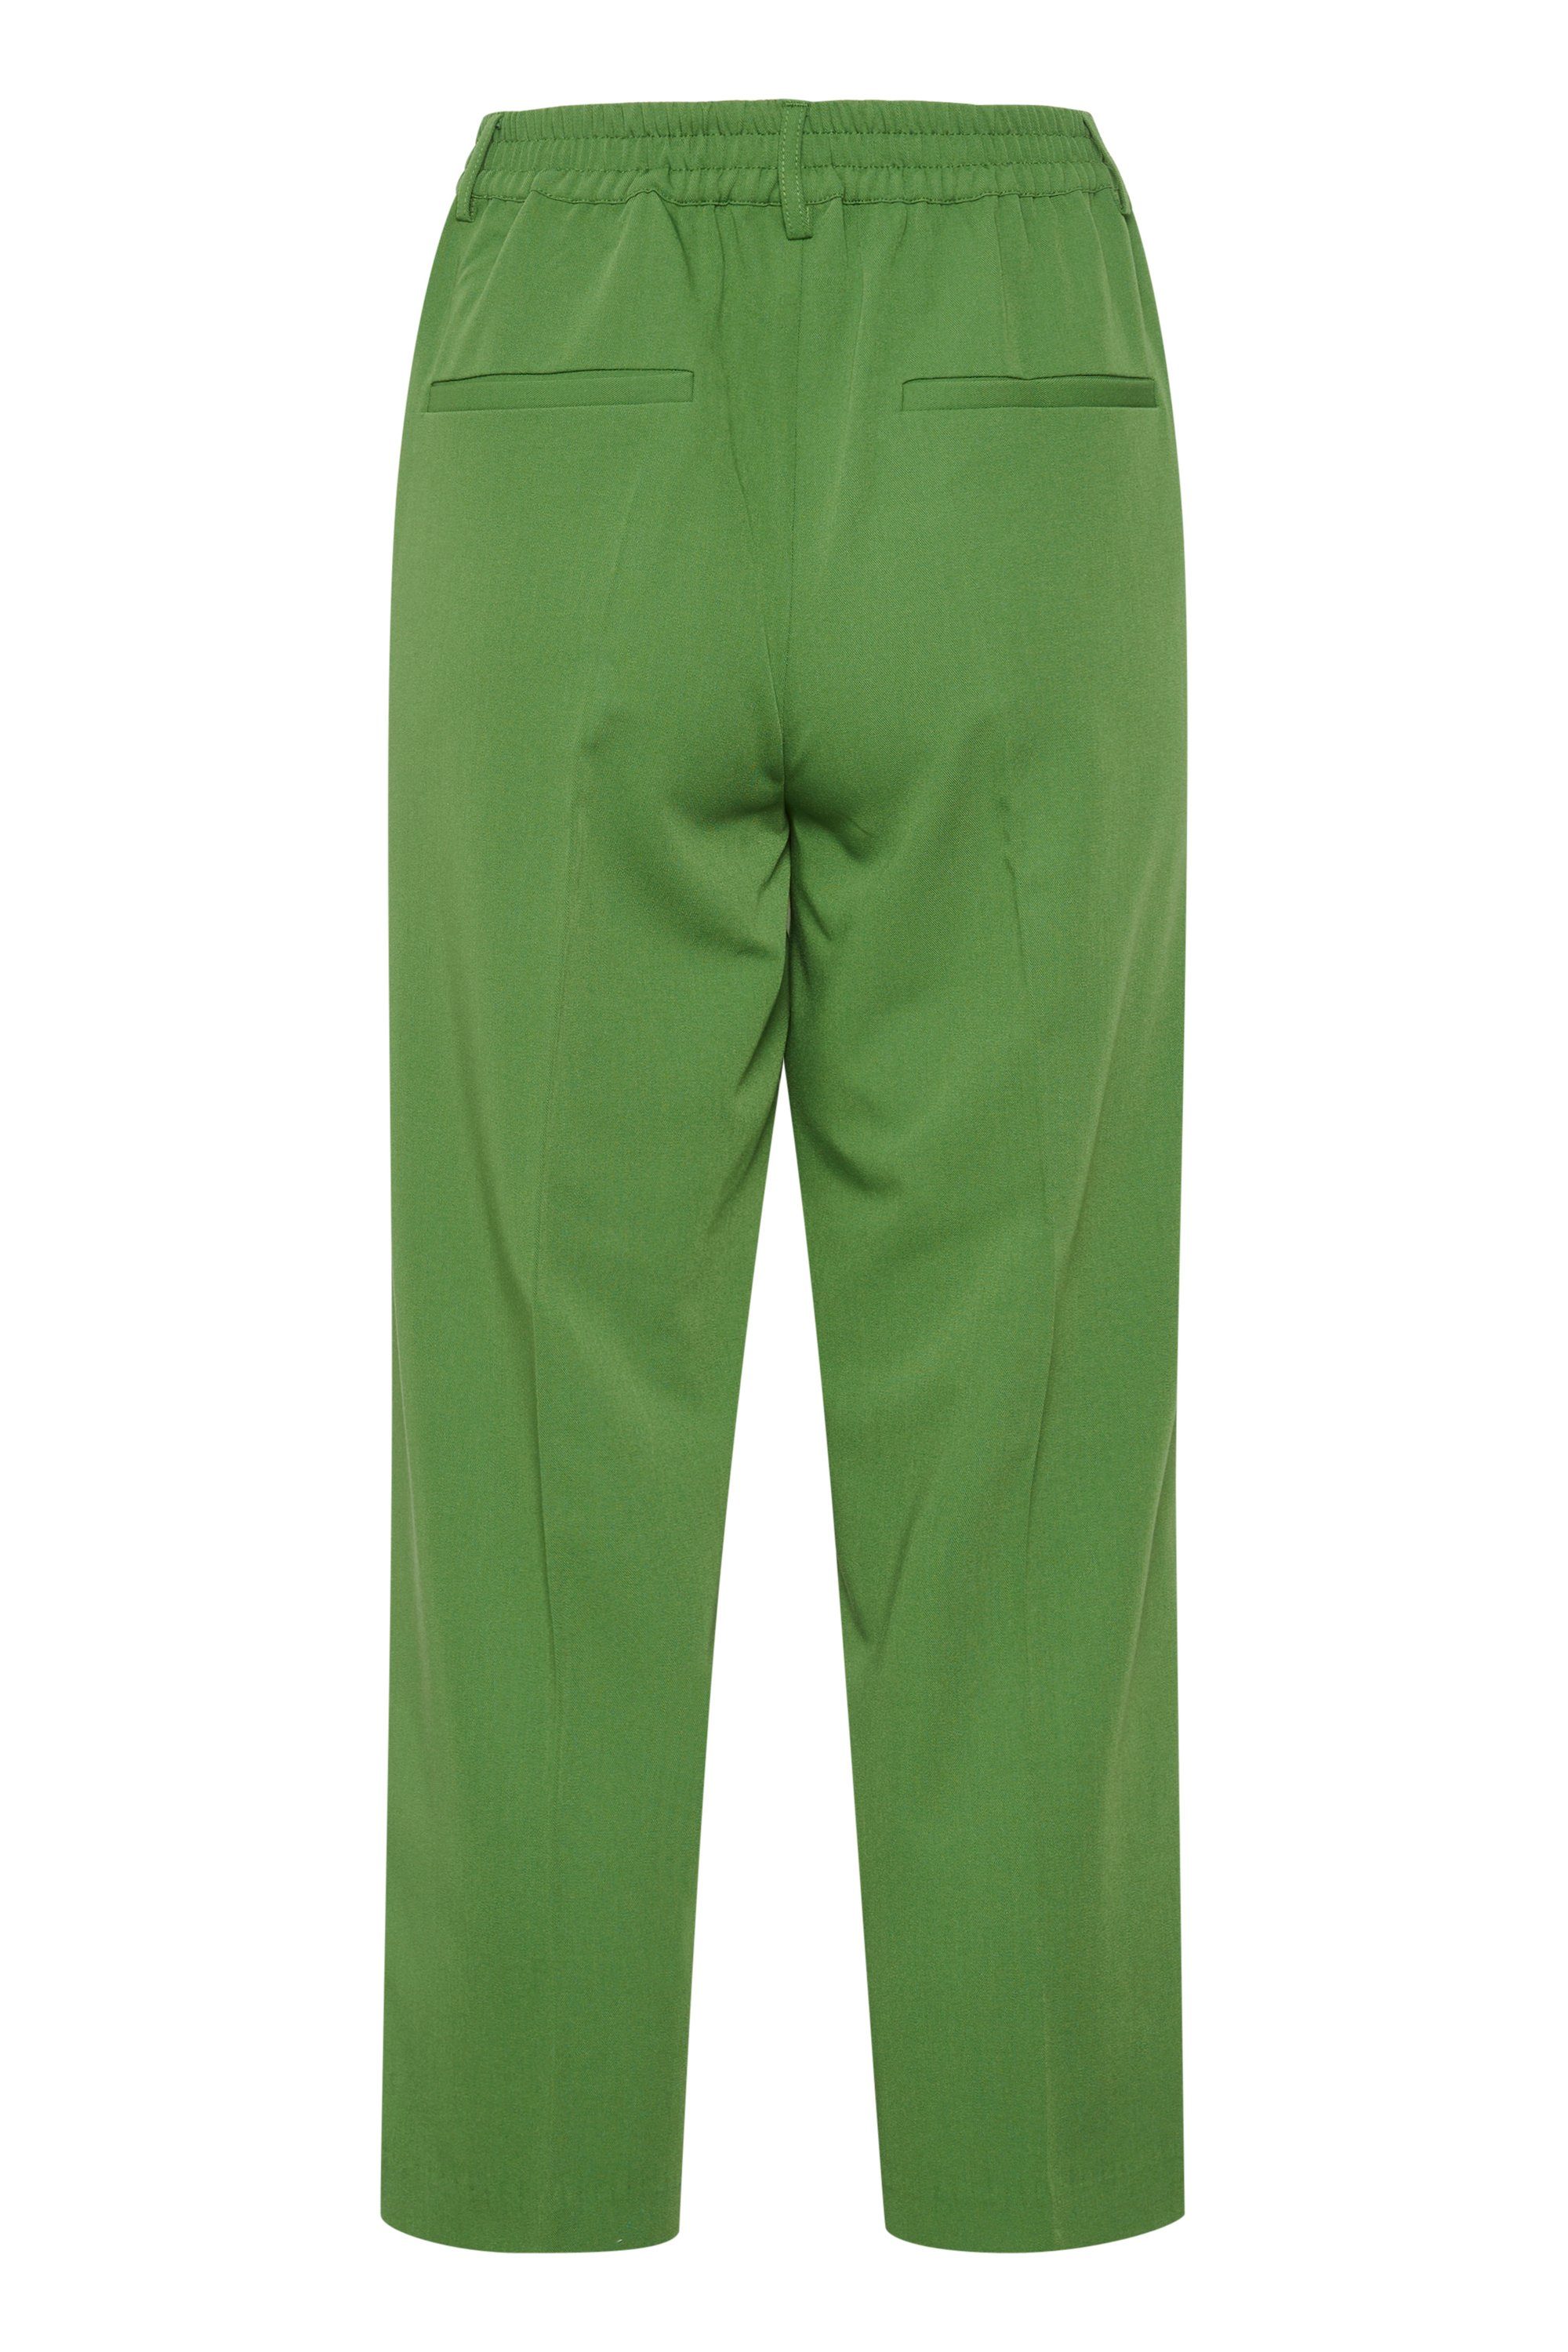 KAFFE KAsakura Suiting Green Anzughose Pants Artichoke